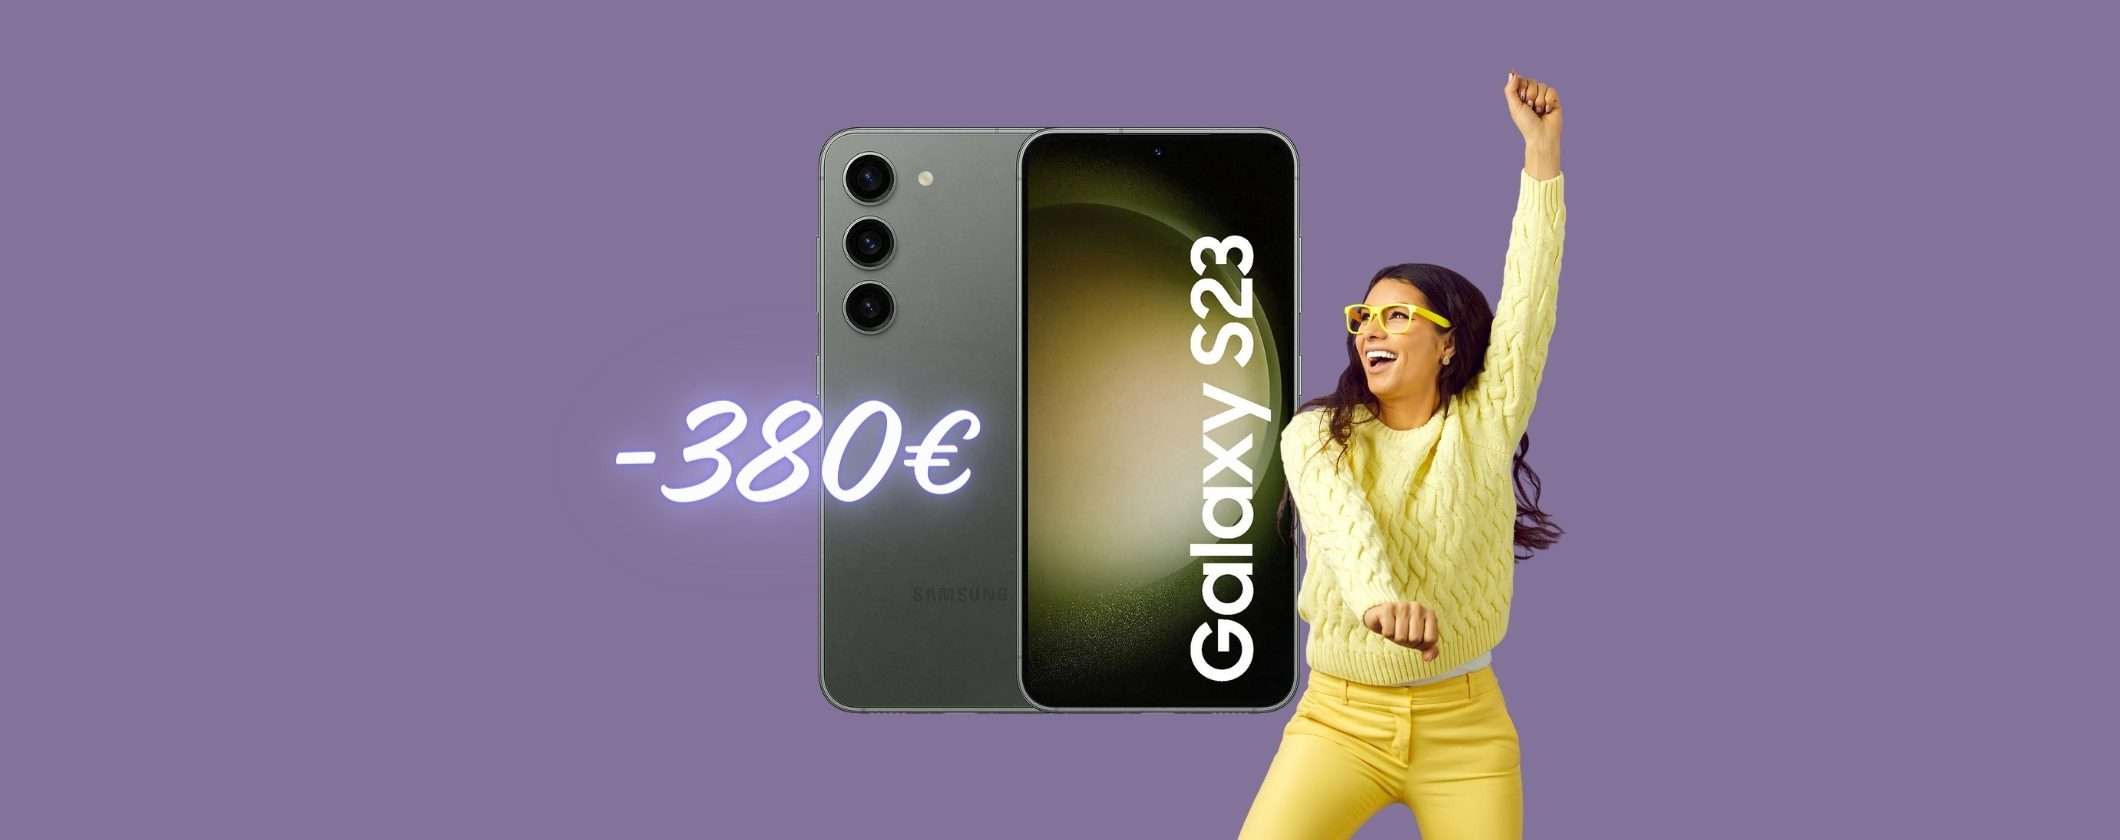 Samsung Galaxy S23: OFFERTA ESPLOSIVA su eBay a -380€